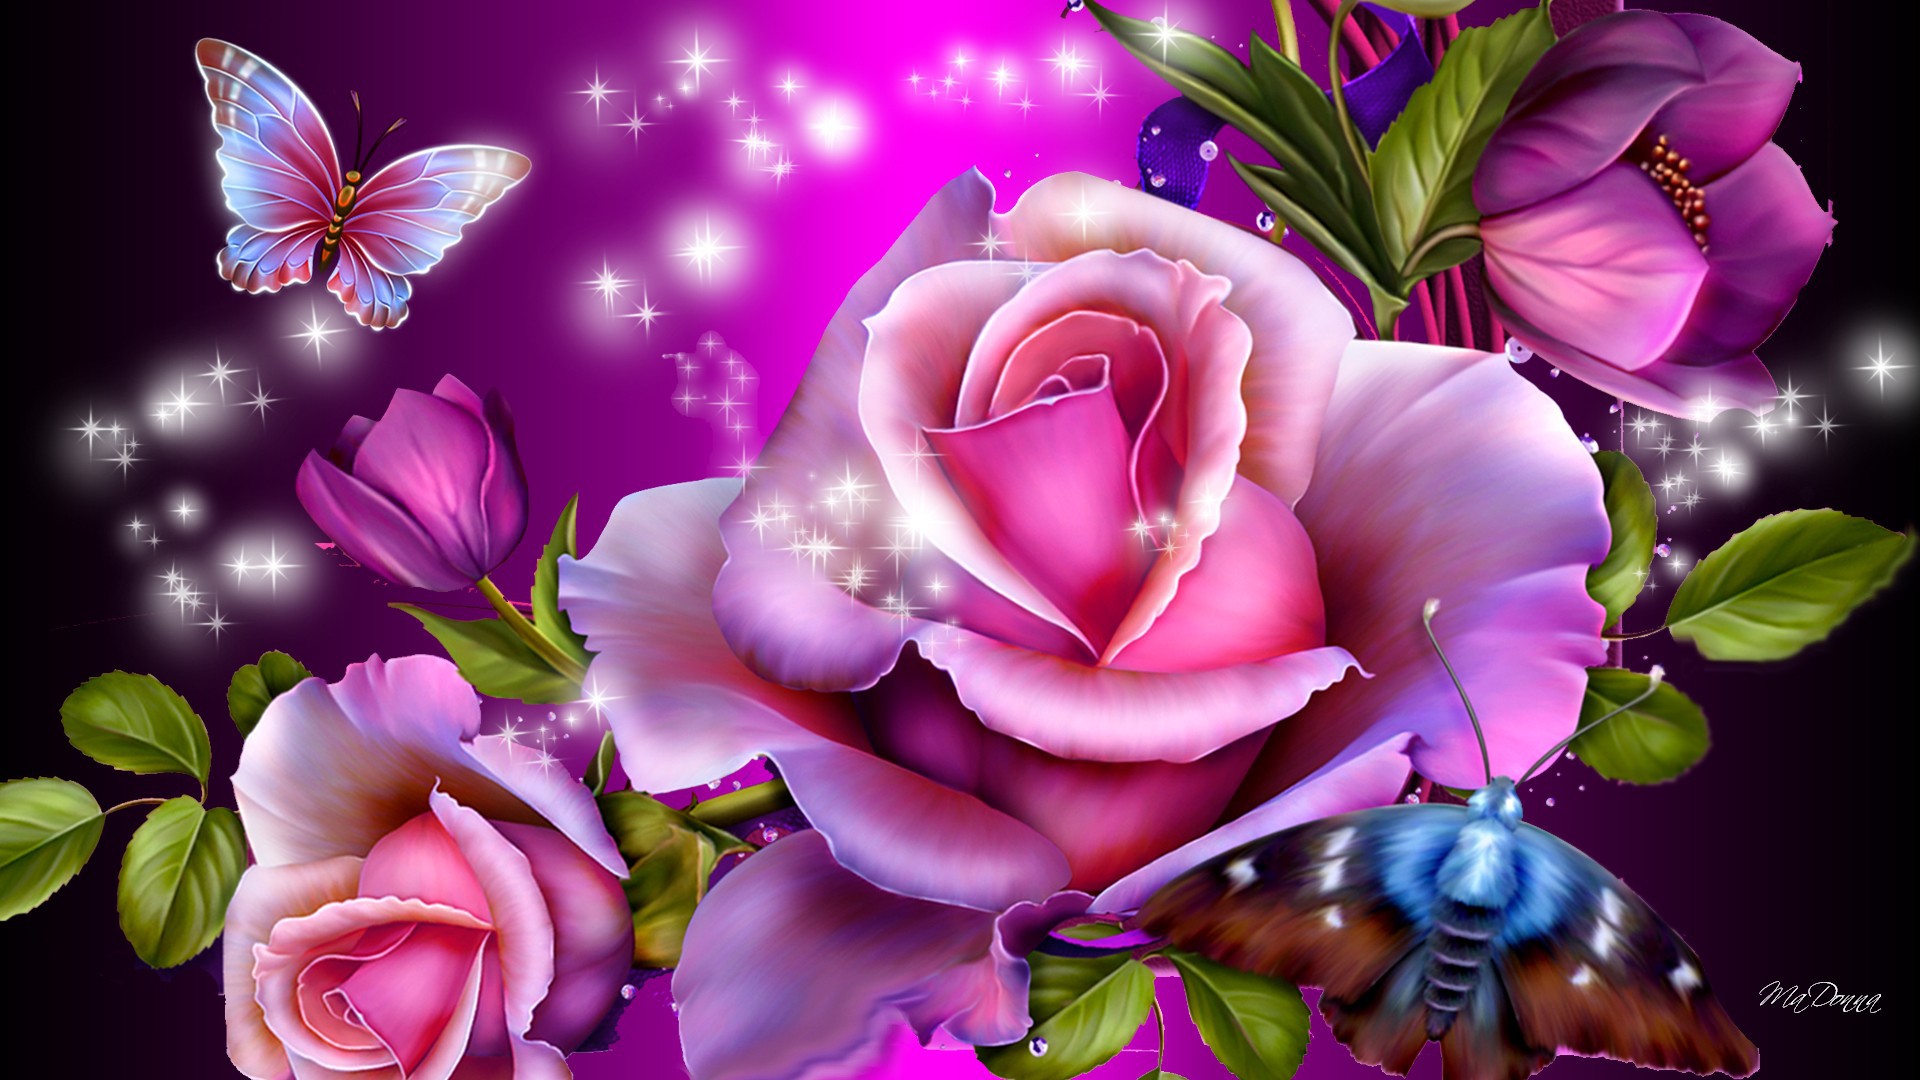 Purple Roses And Butterflies Desktop Wallpaper